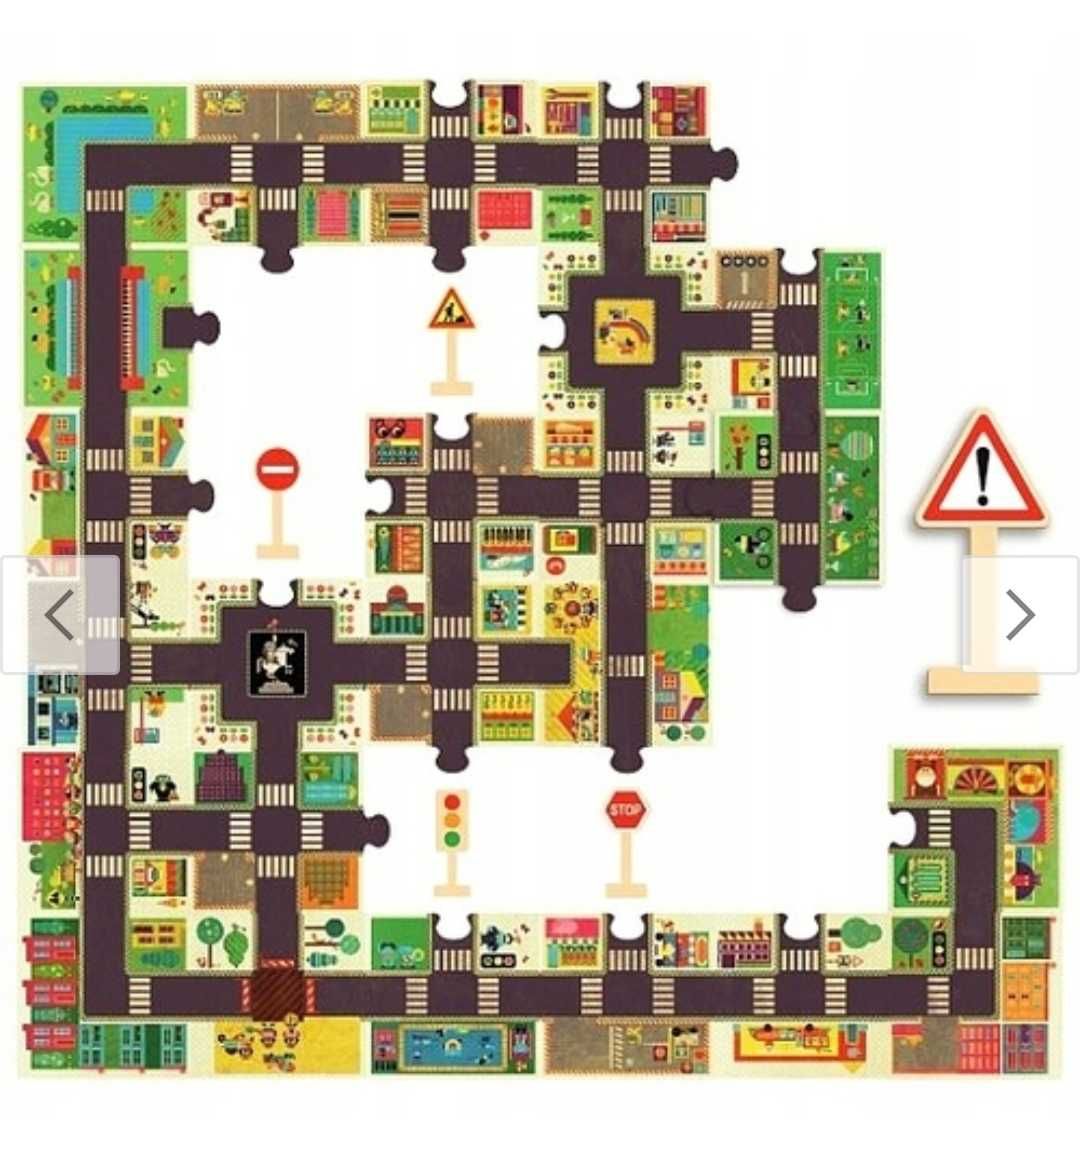 Mega Puzzle geant 24 elementy DJECO ulice znaki